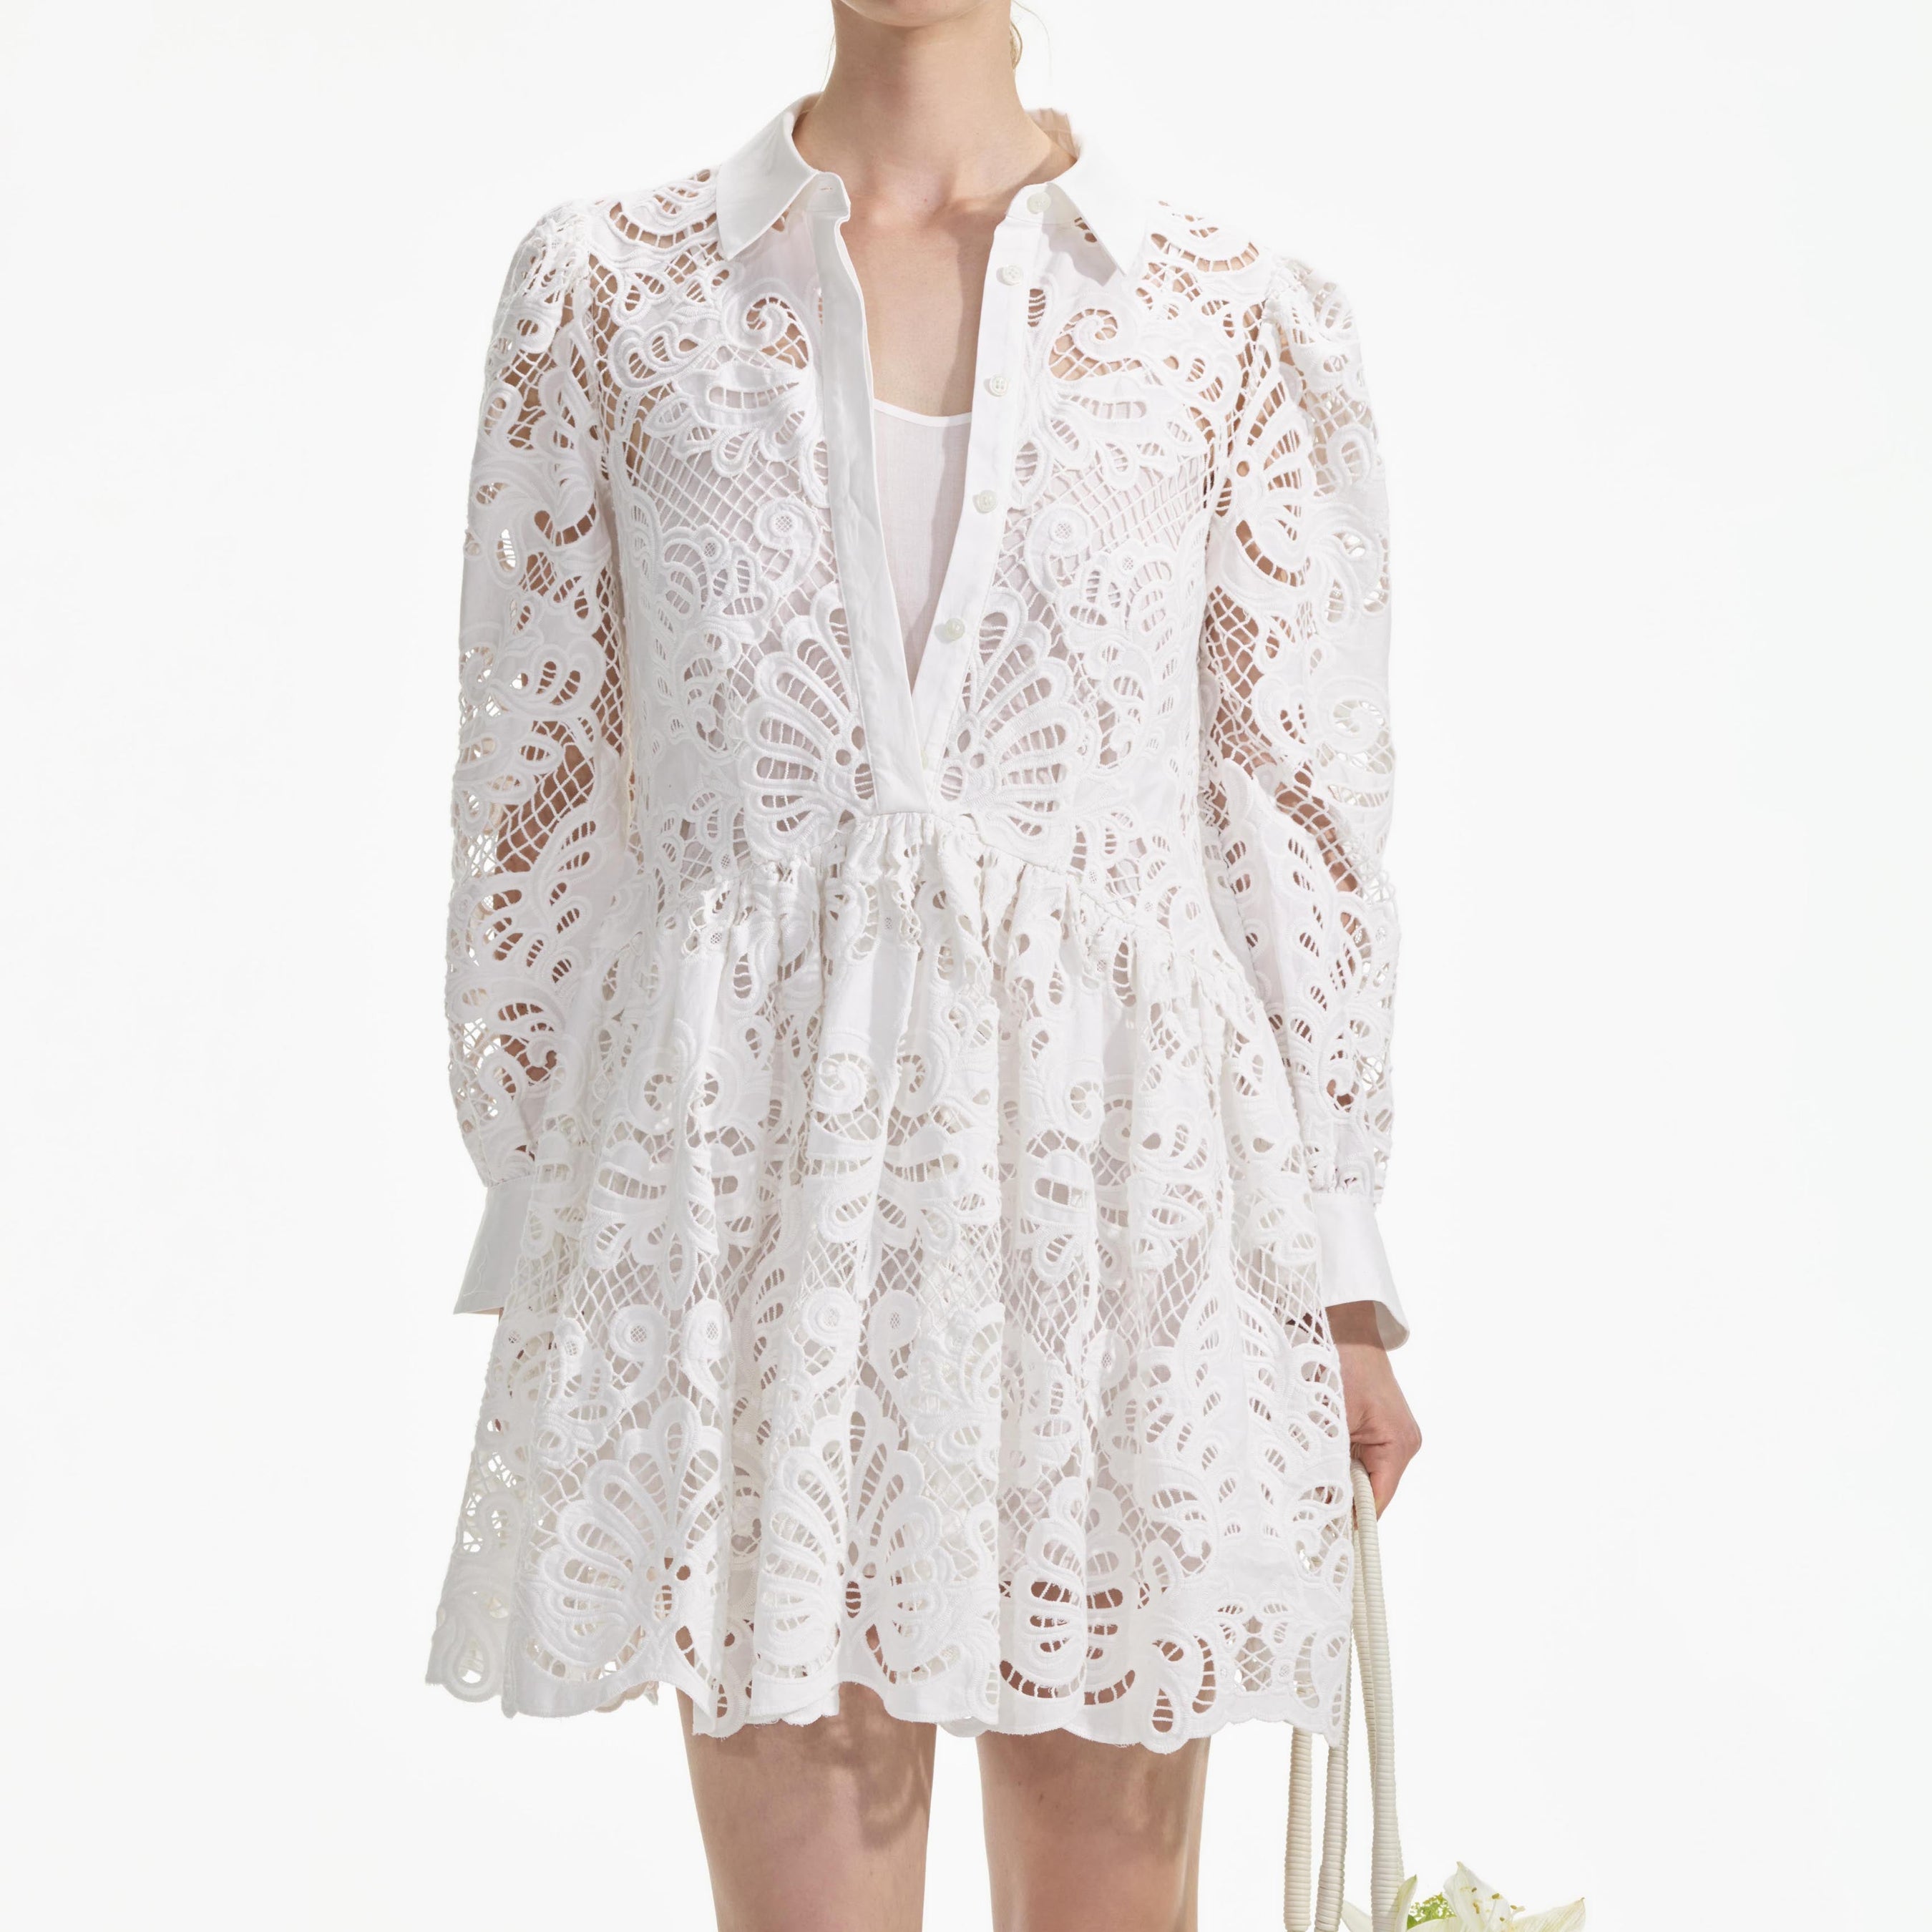 White Cotton Lace Mini Shirt Dress